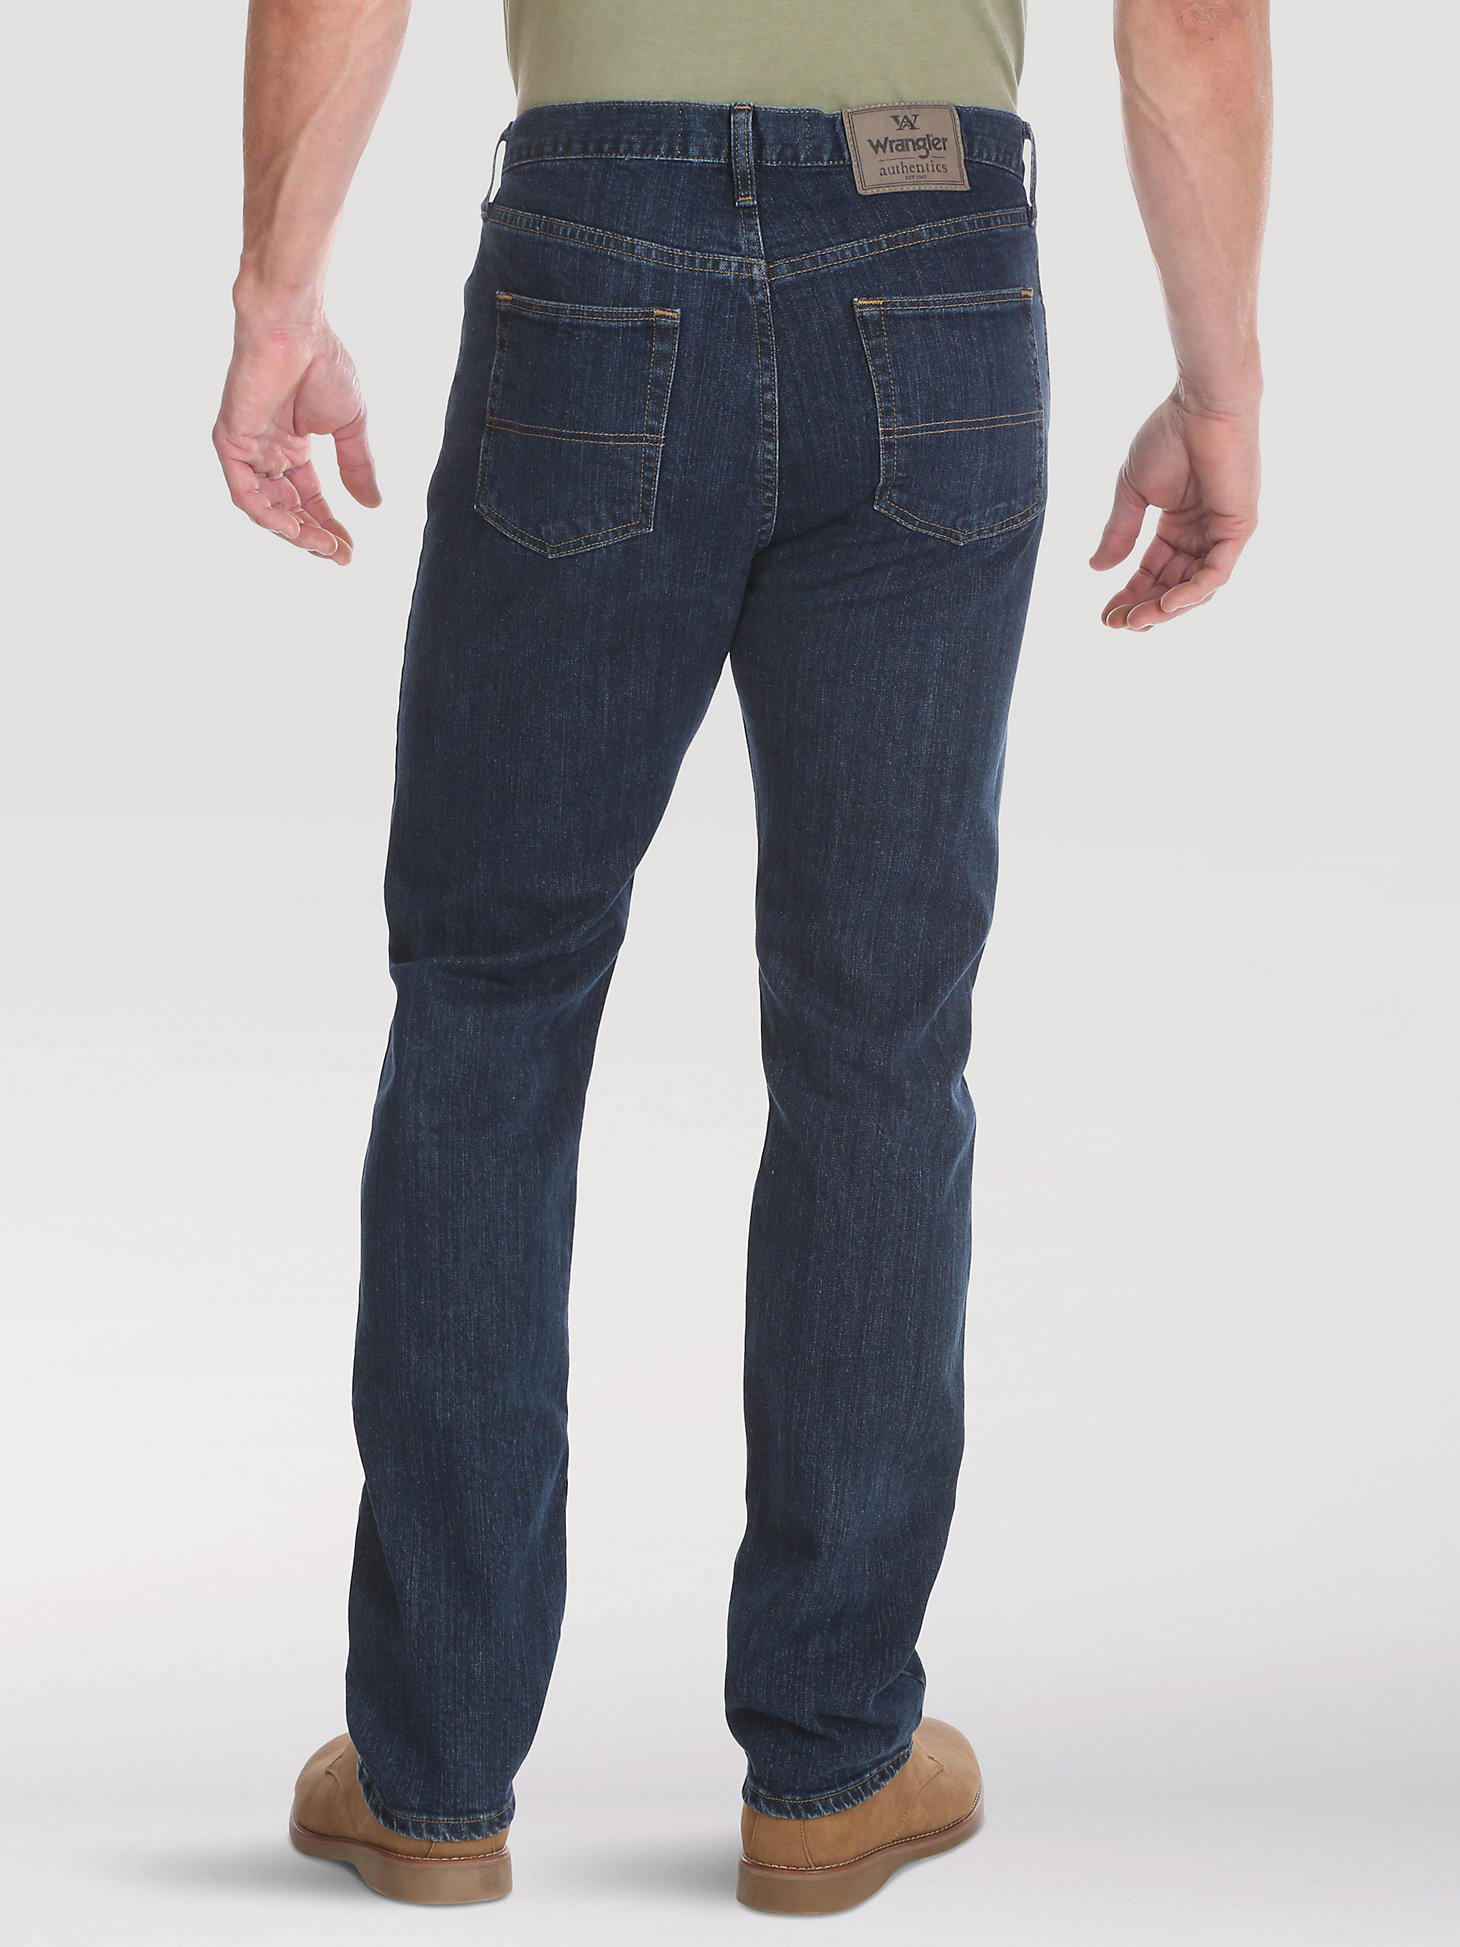 Wrangler Authentics Men’s Big & Tall Regular Fit Comfort Flex Waist Jean